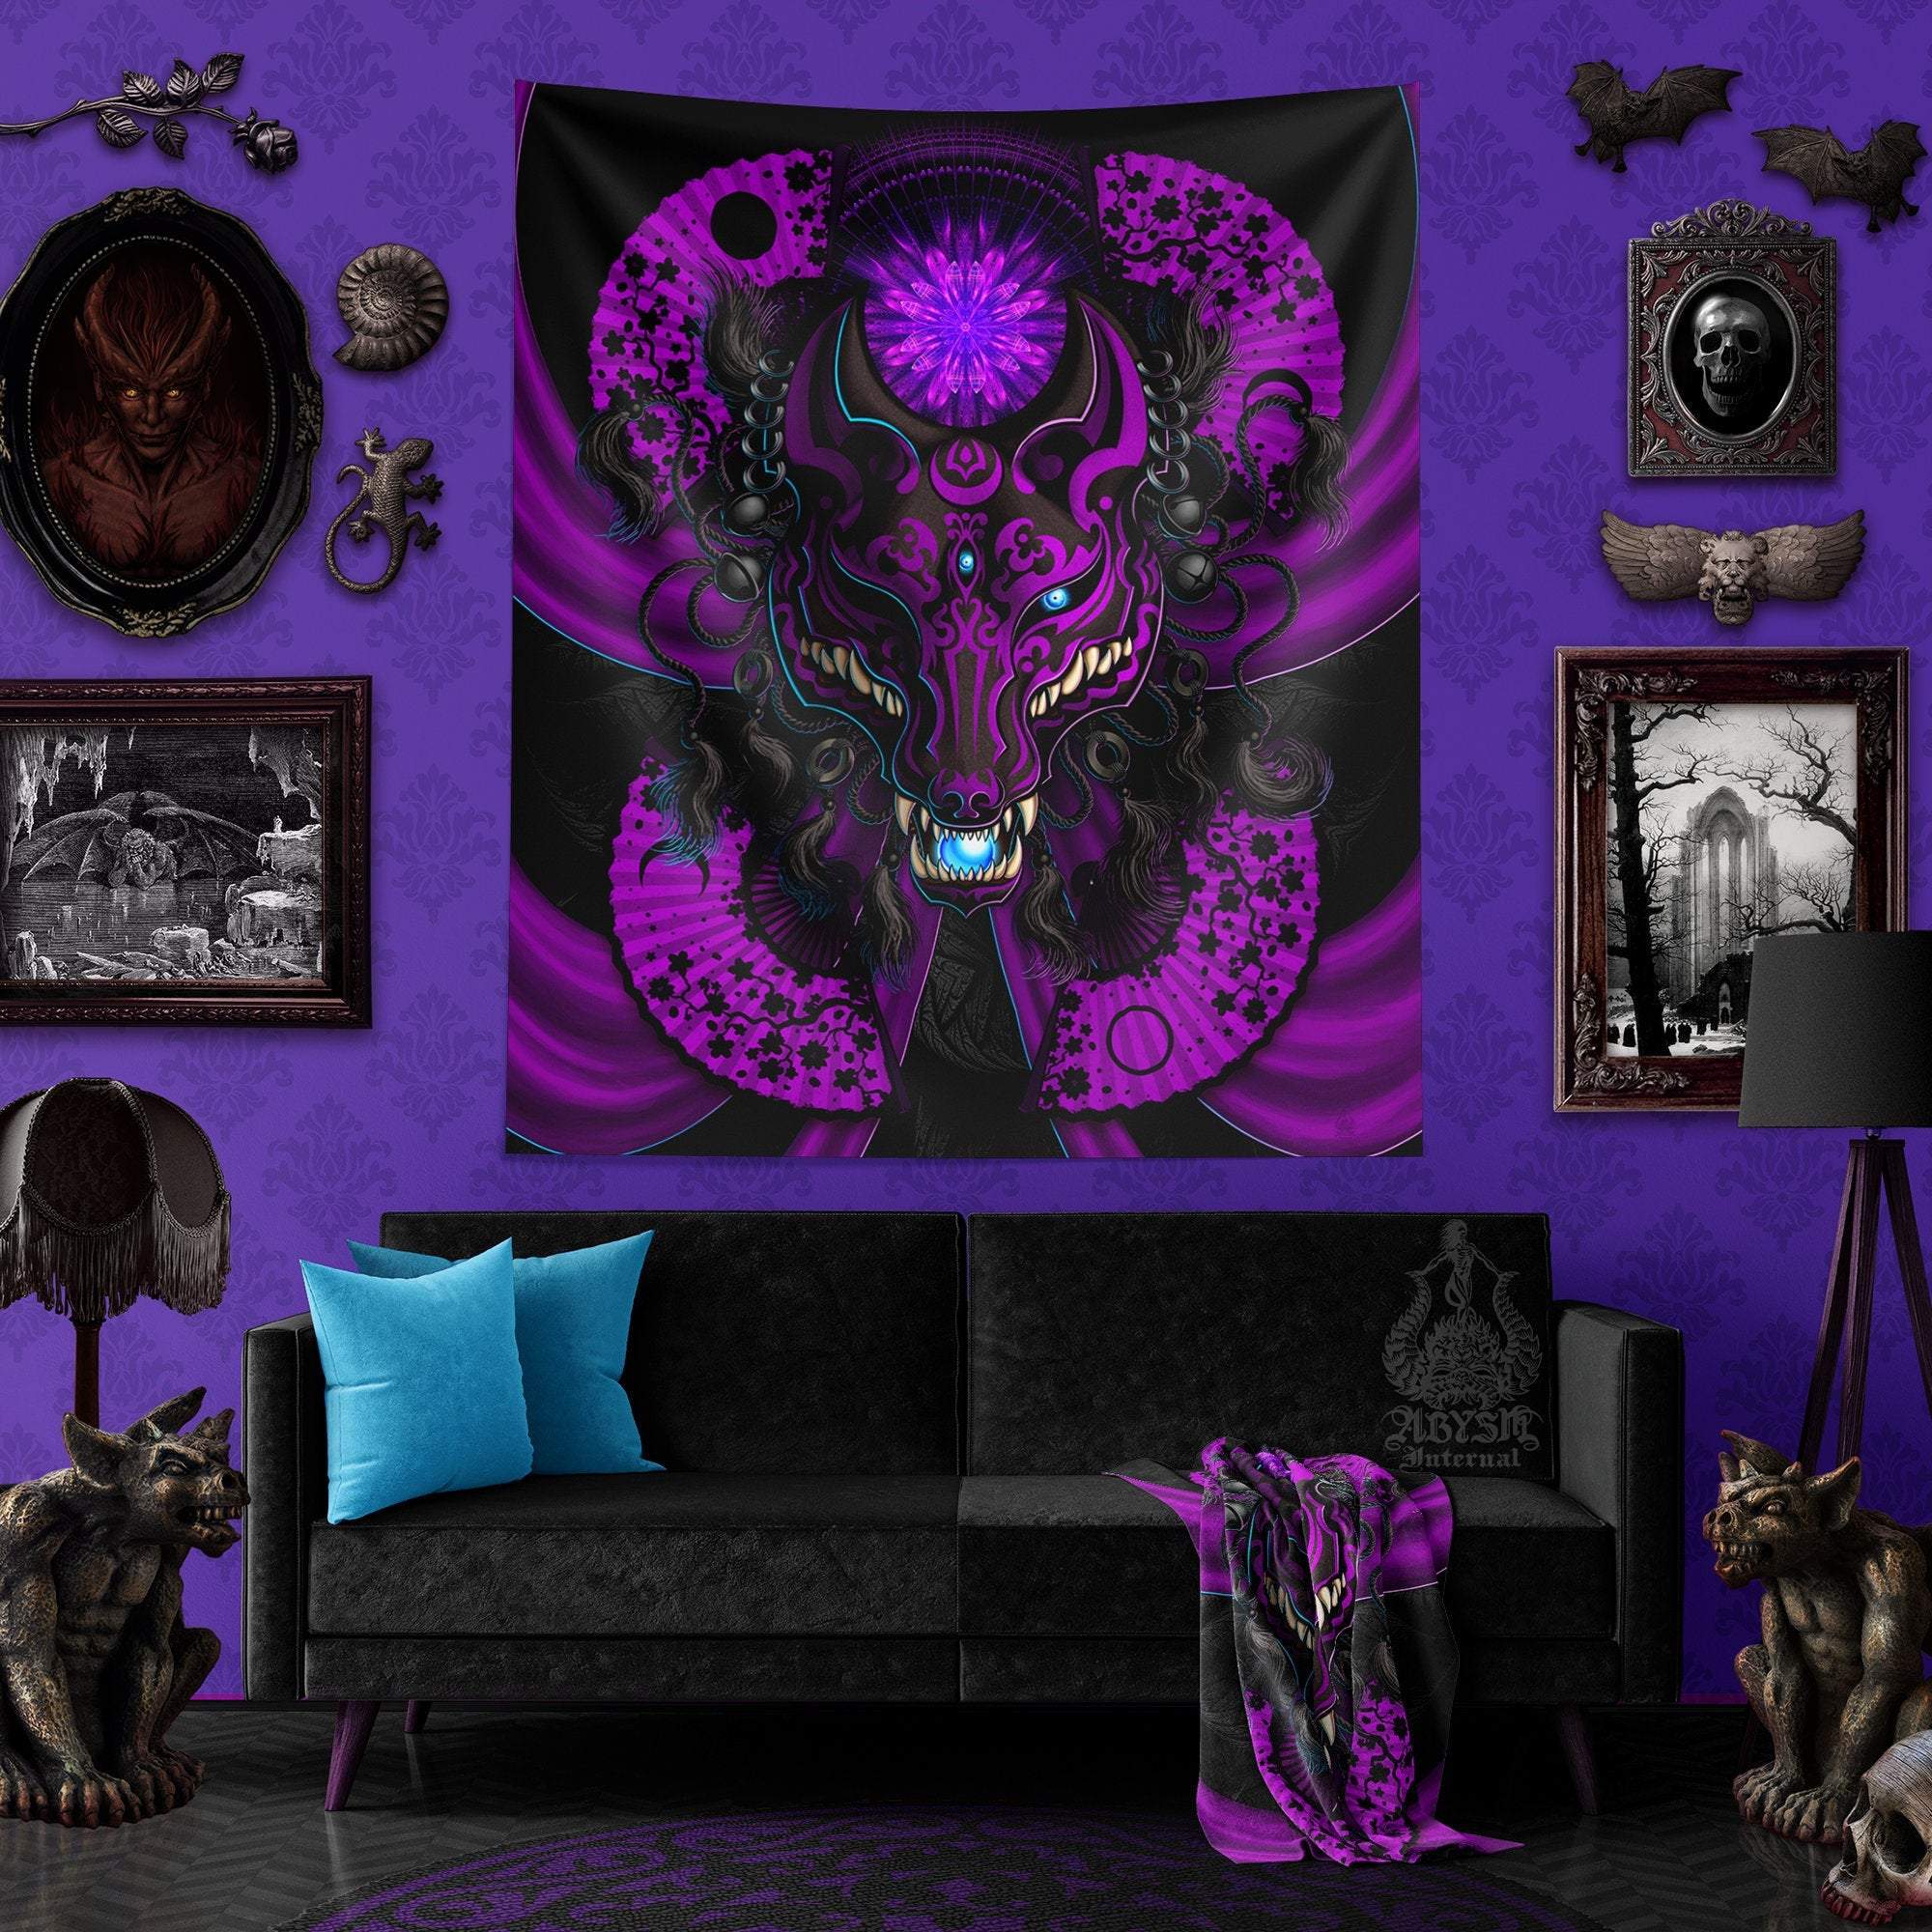 Pastel Goth Tapestry, Japanese Wall Hanging, Anime and Gamer Home Decor, Art Print, Okami, Kitsune Mask - Black & Purple Fox - Abysm Internal